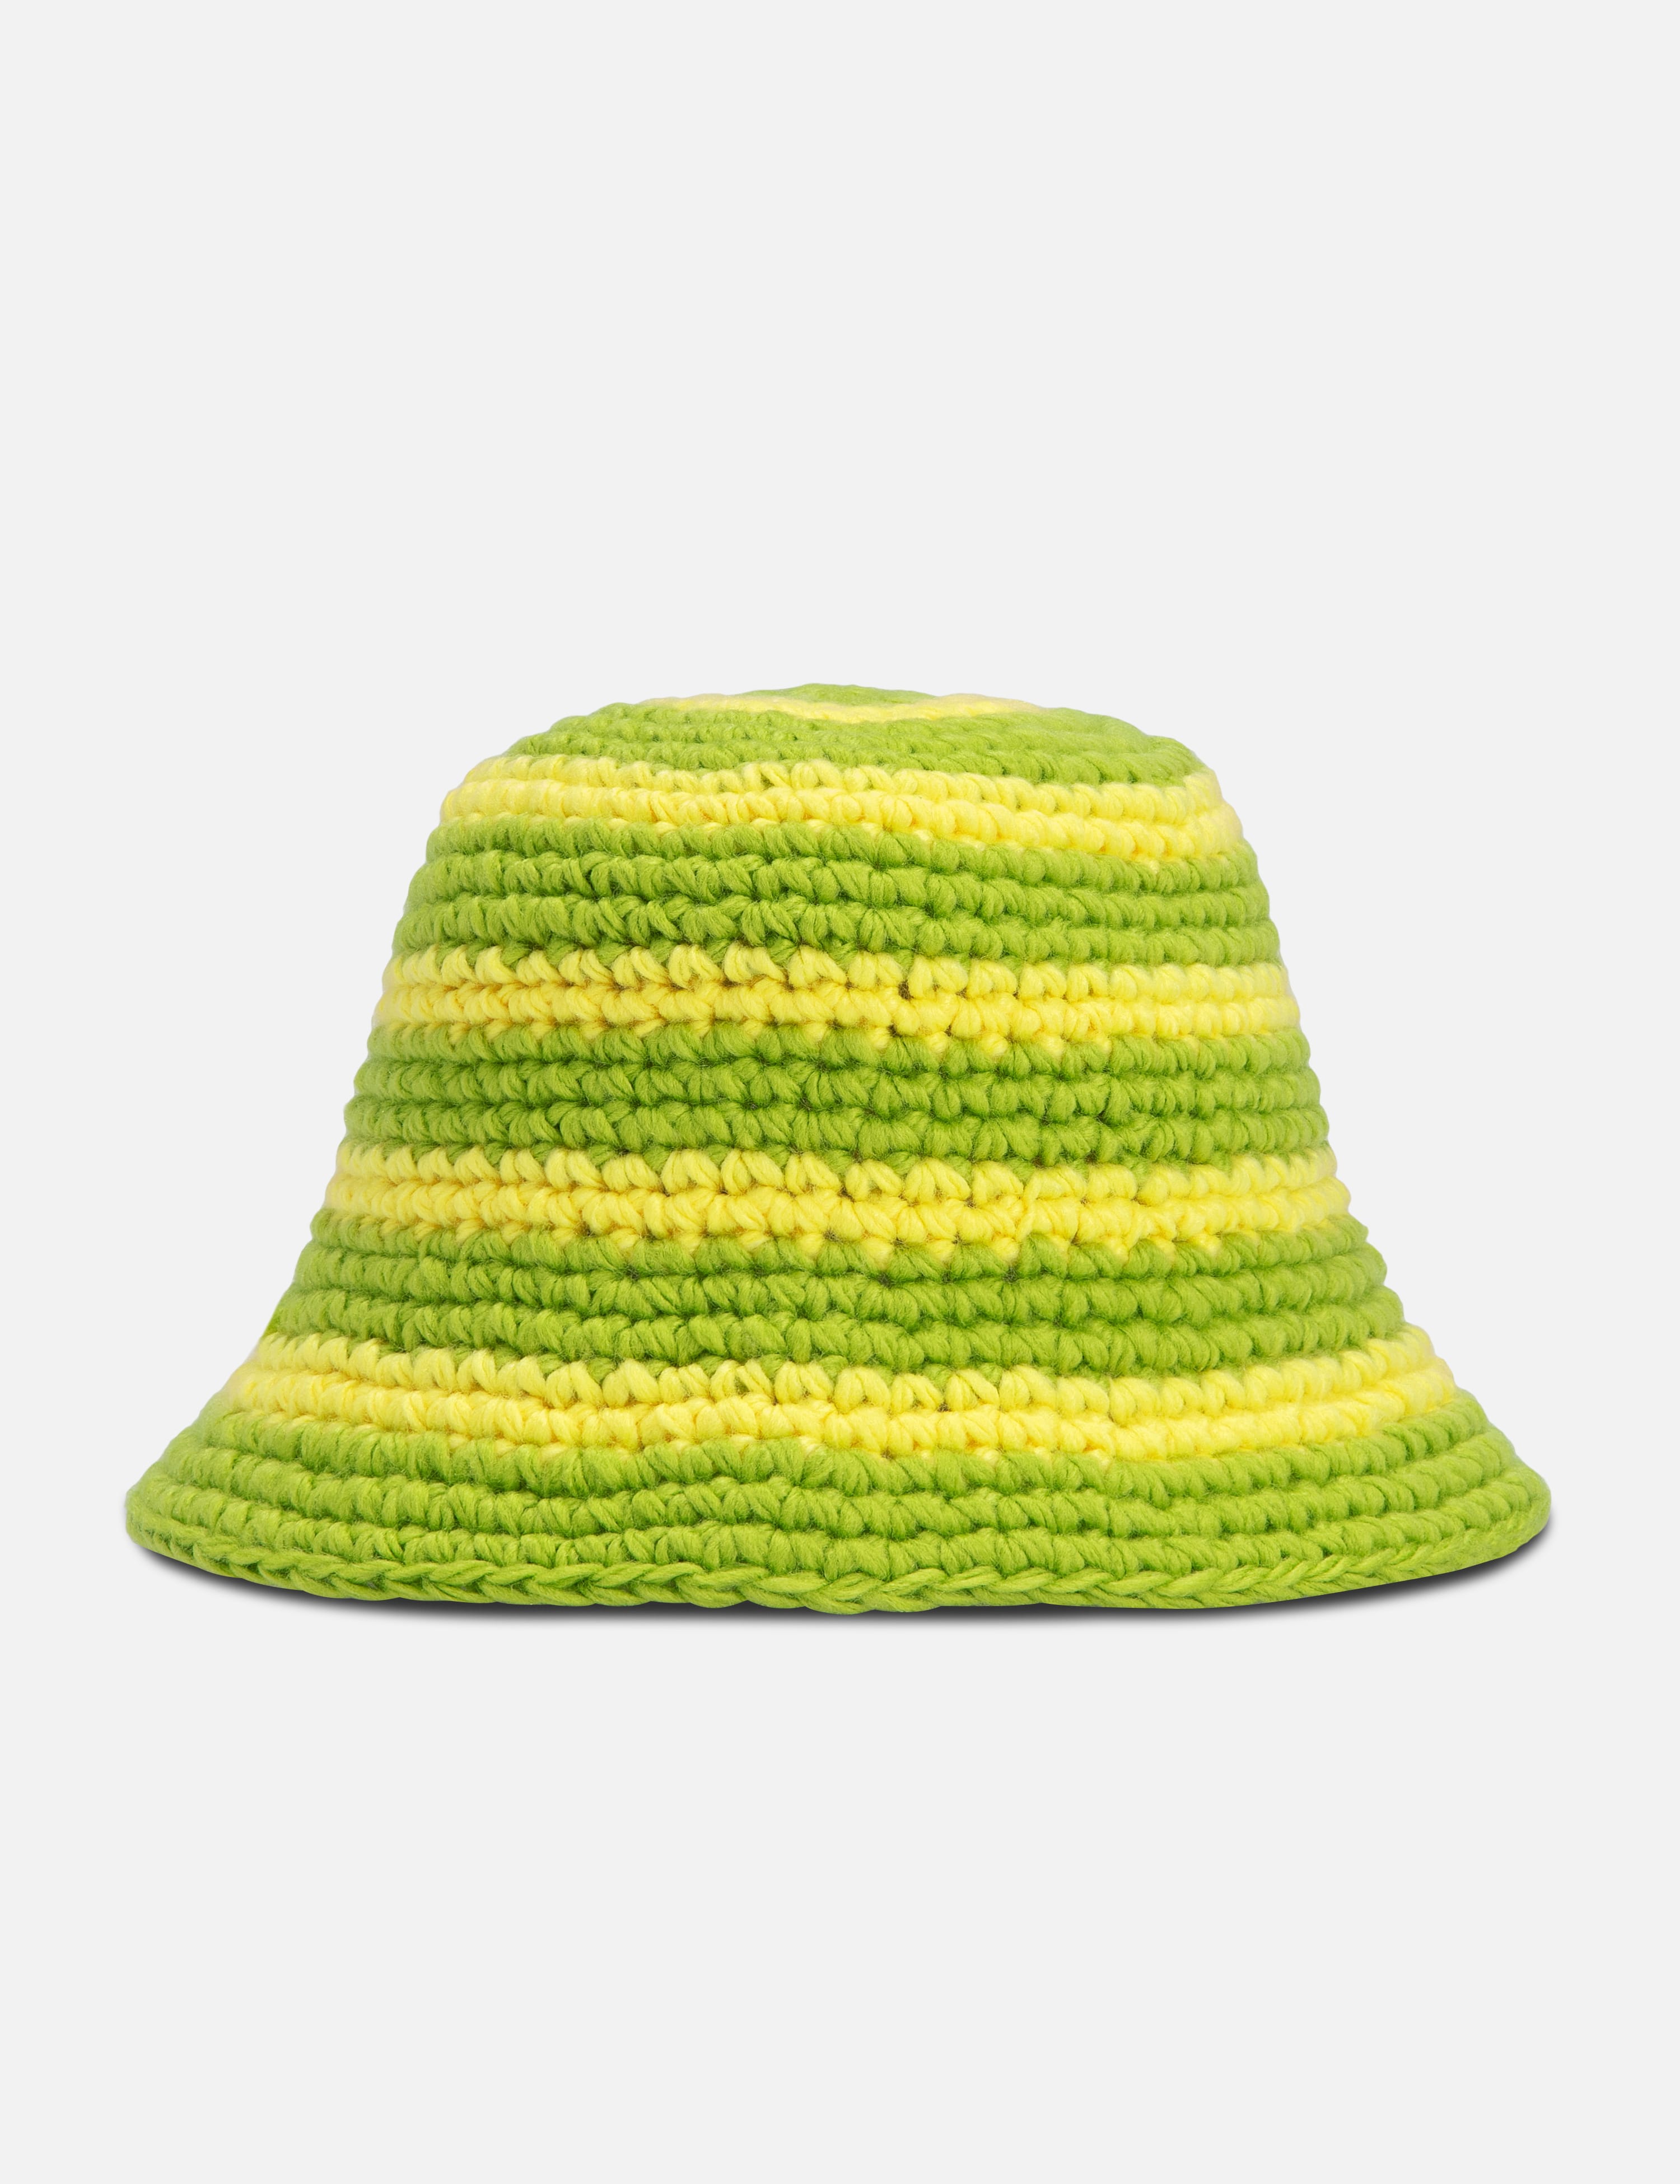 Stüssy - Swirl Knit Bucket Hat | HBX - Globally Curated Fashion 